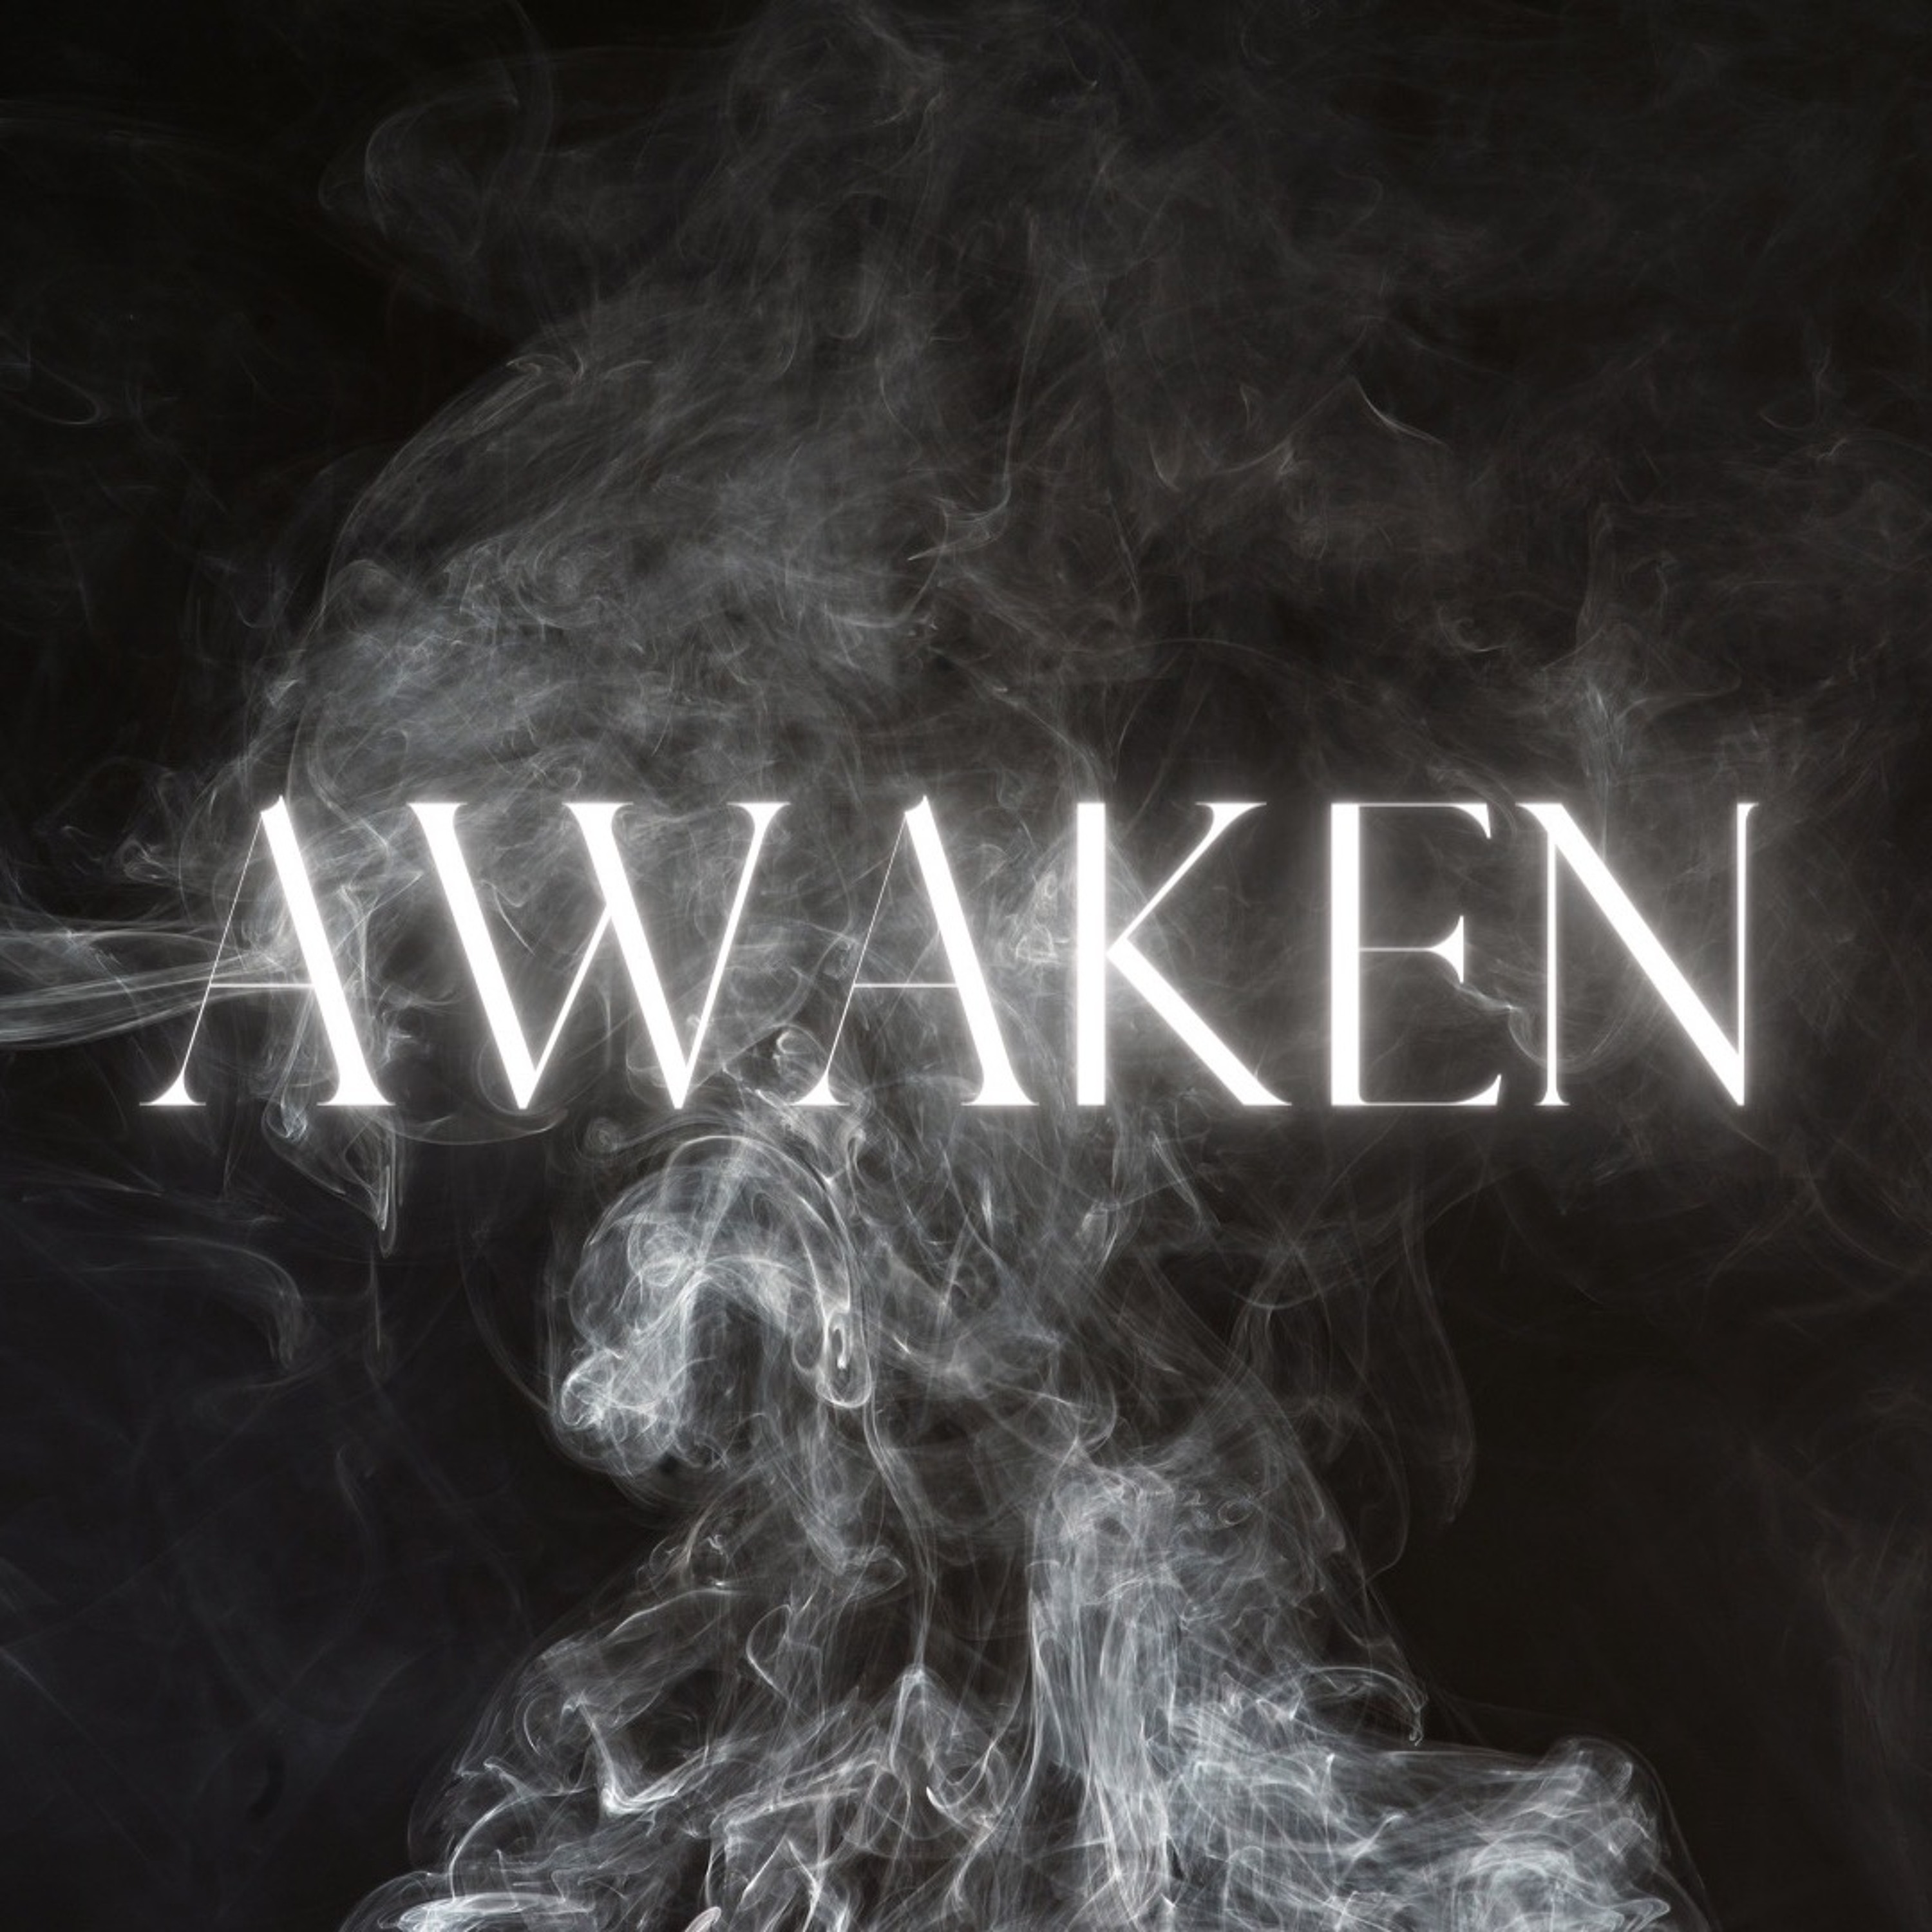 Awaken - What Do You Want? | Derek Quinby